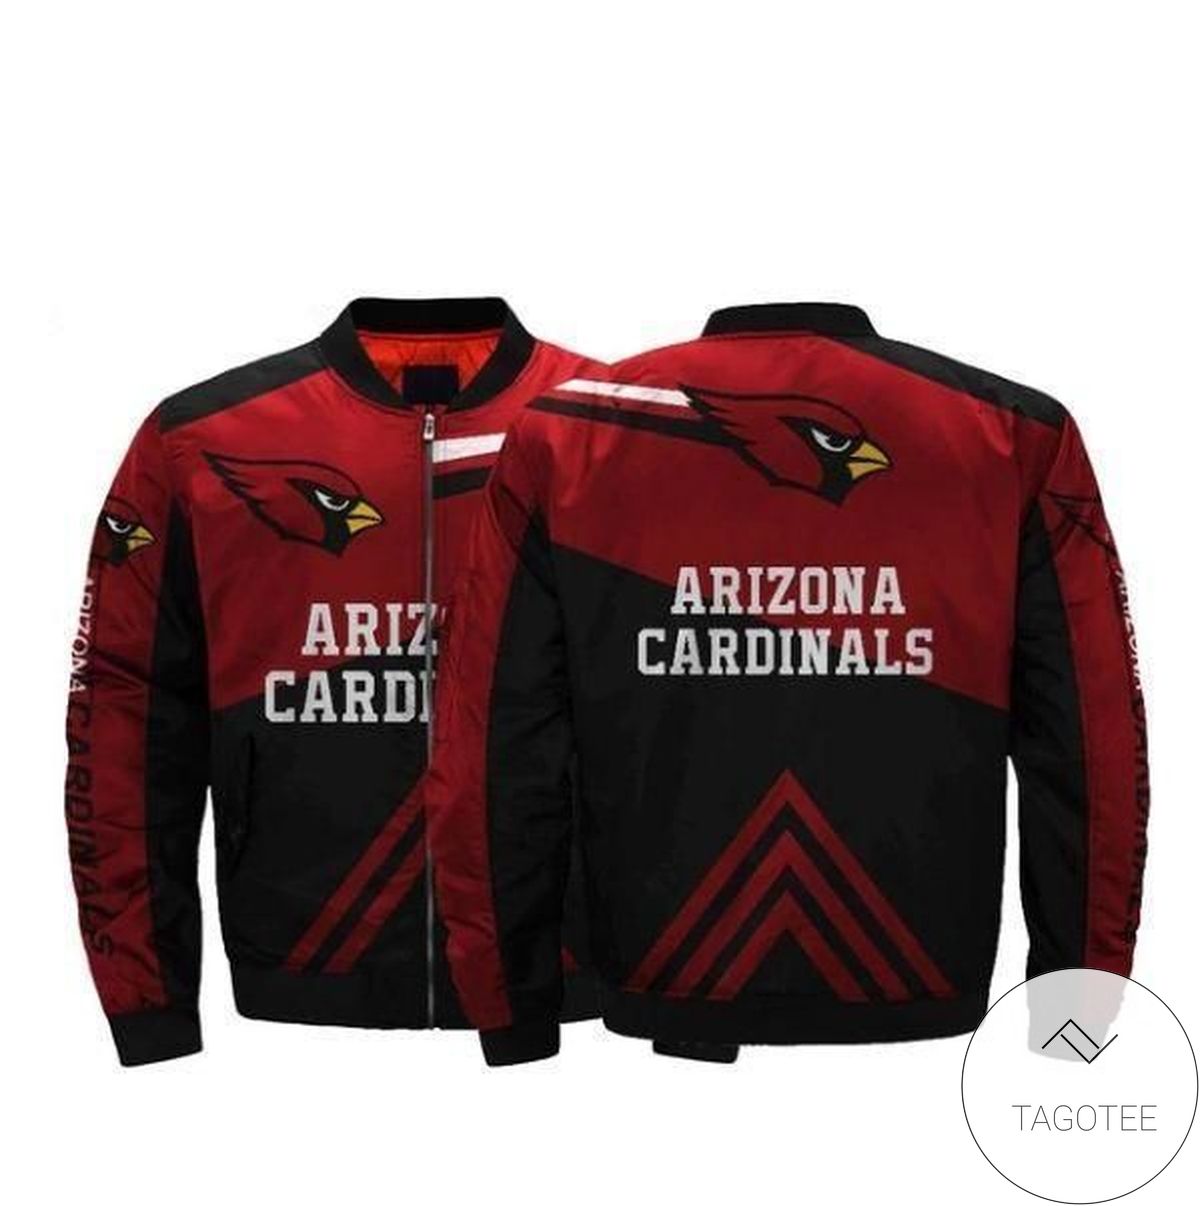 Arizona Cardinals Red And Black 3d Printed Unisex Bomber Jacket